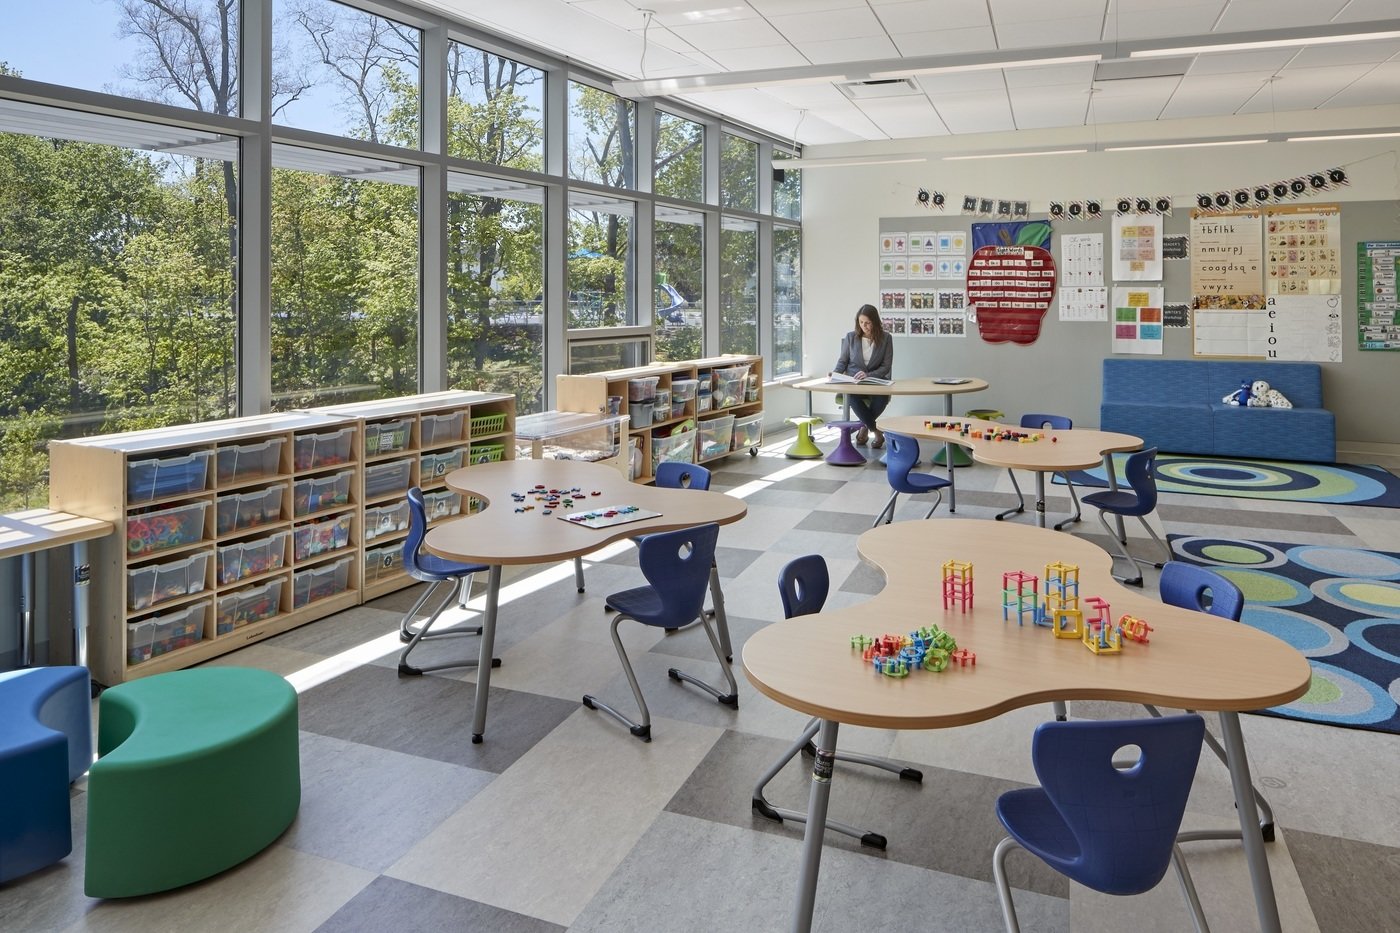 16 tskp greenwhich new lebanon elementary school flexible interior classroom seating 1400 0x0x2811x1874 q85